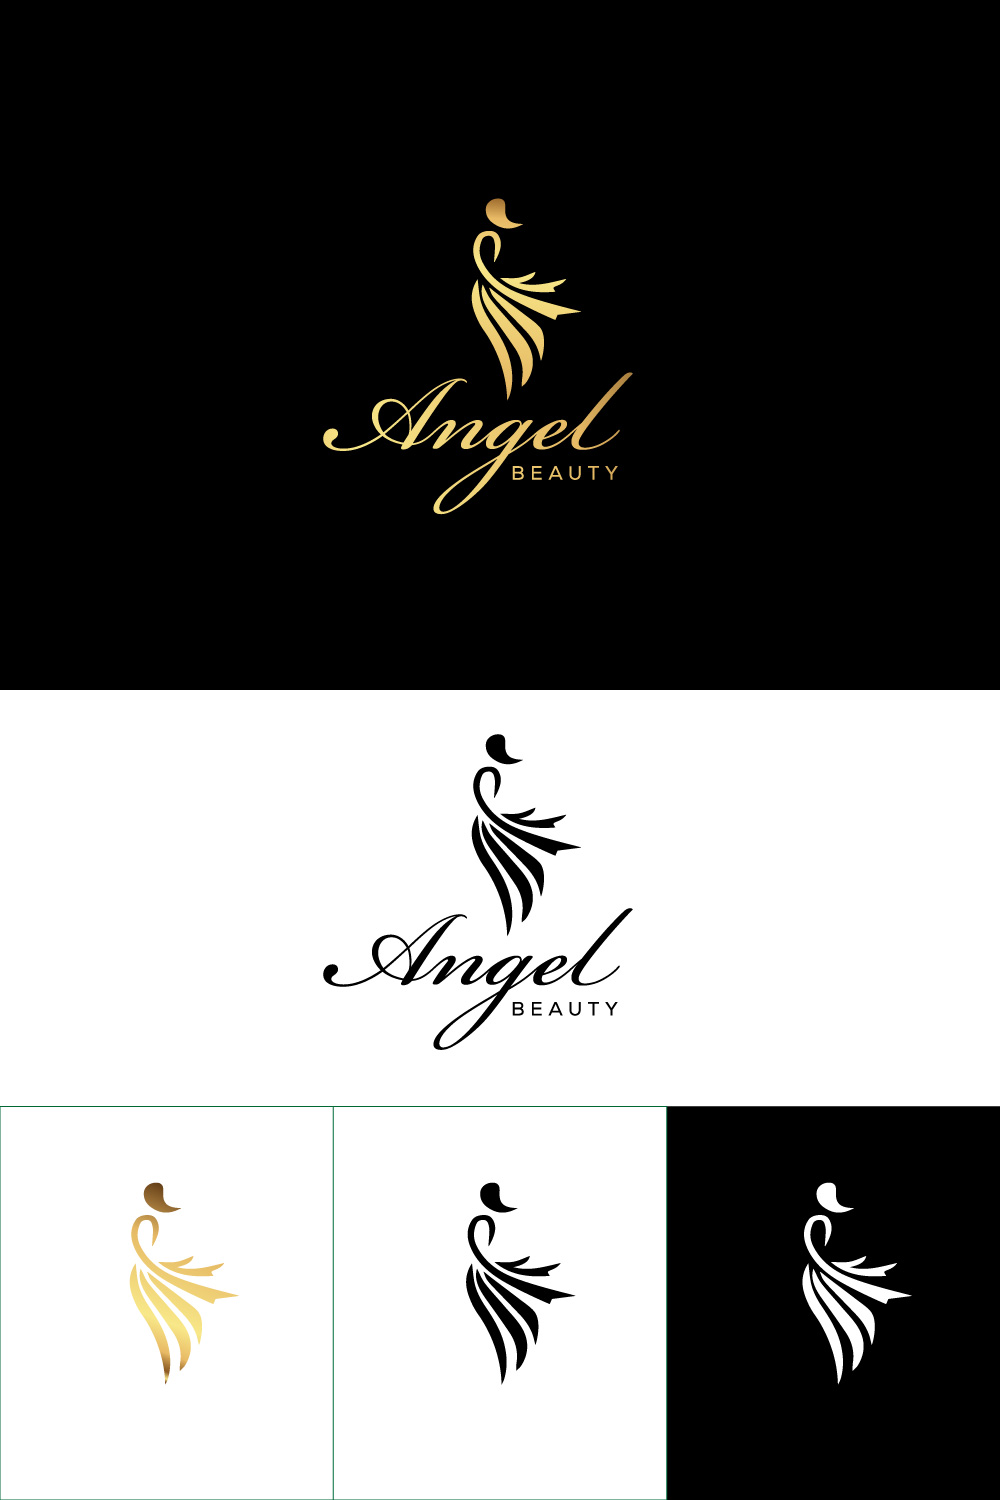 Angle Beauty, Fashion Related Logo pinterest image.